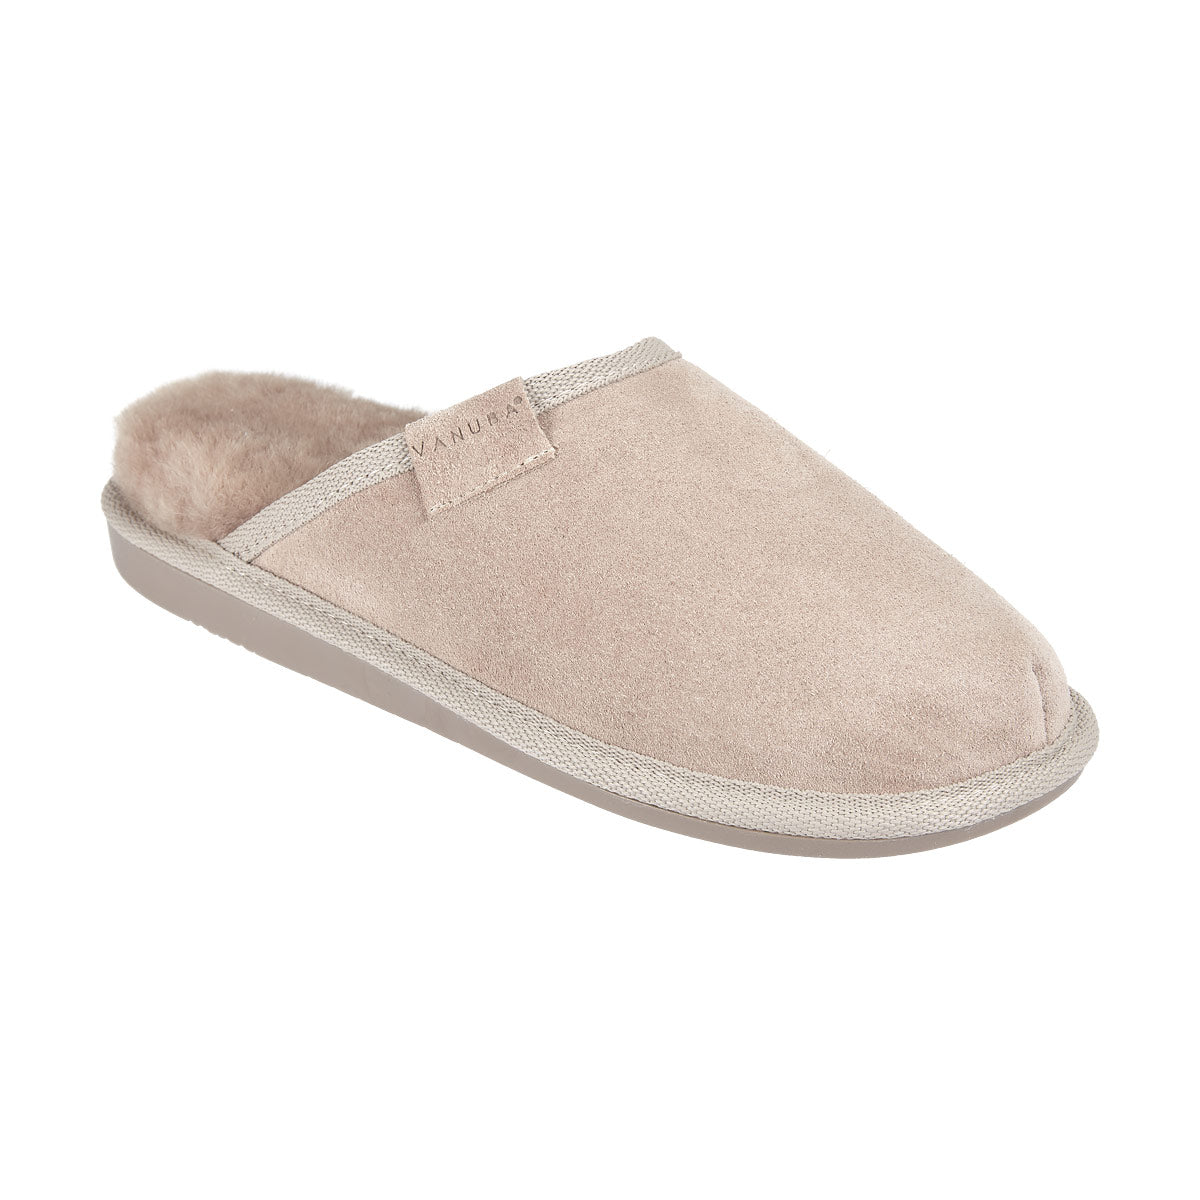 SOAY Men's beige sheep slippers